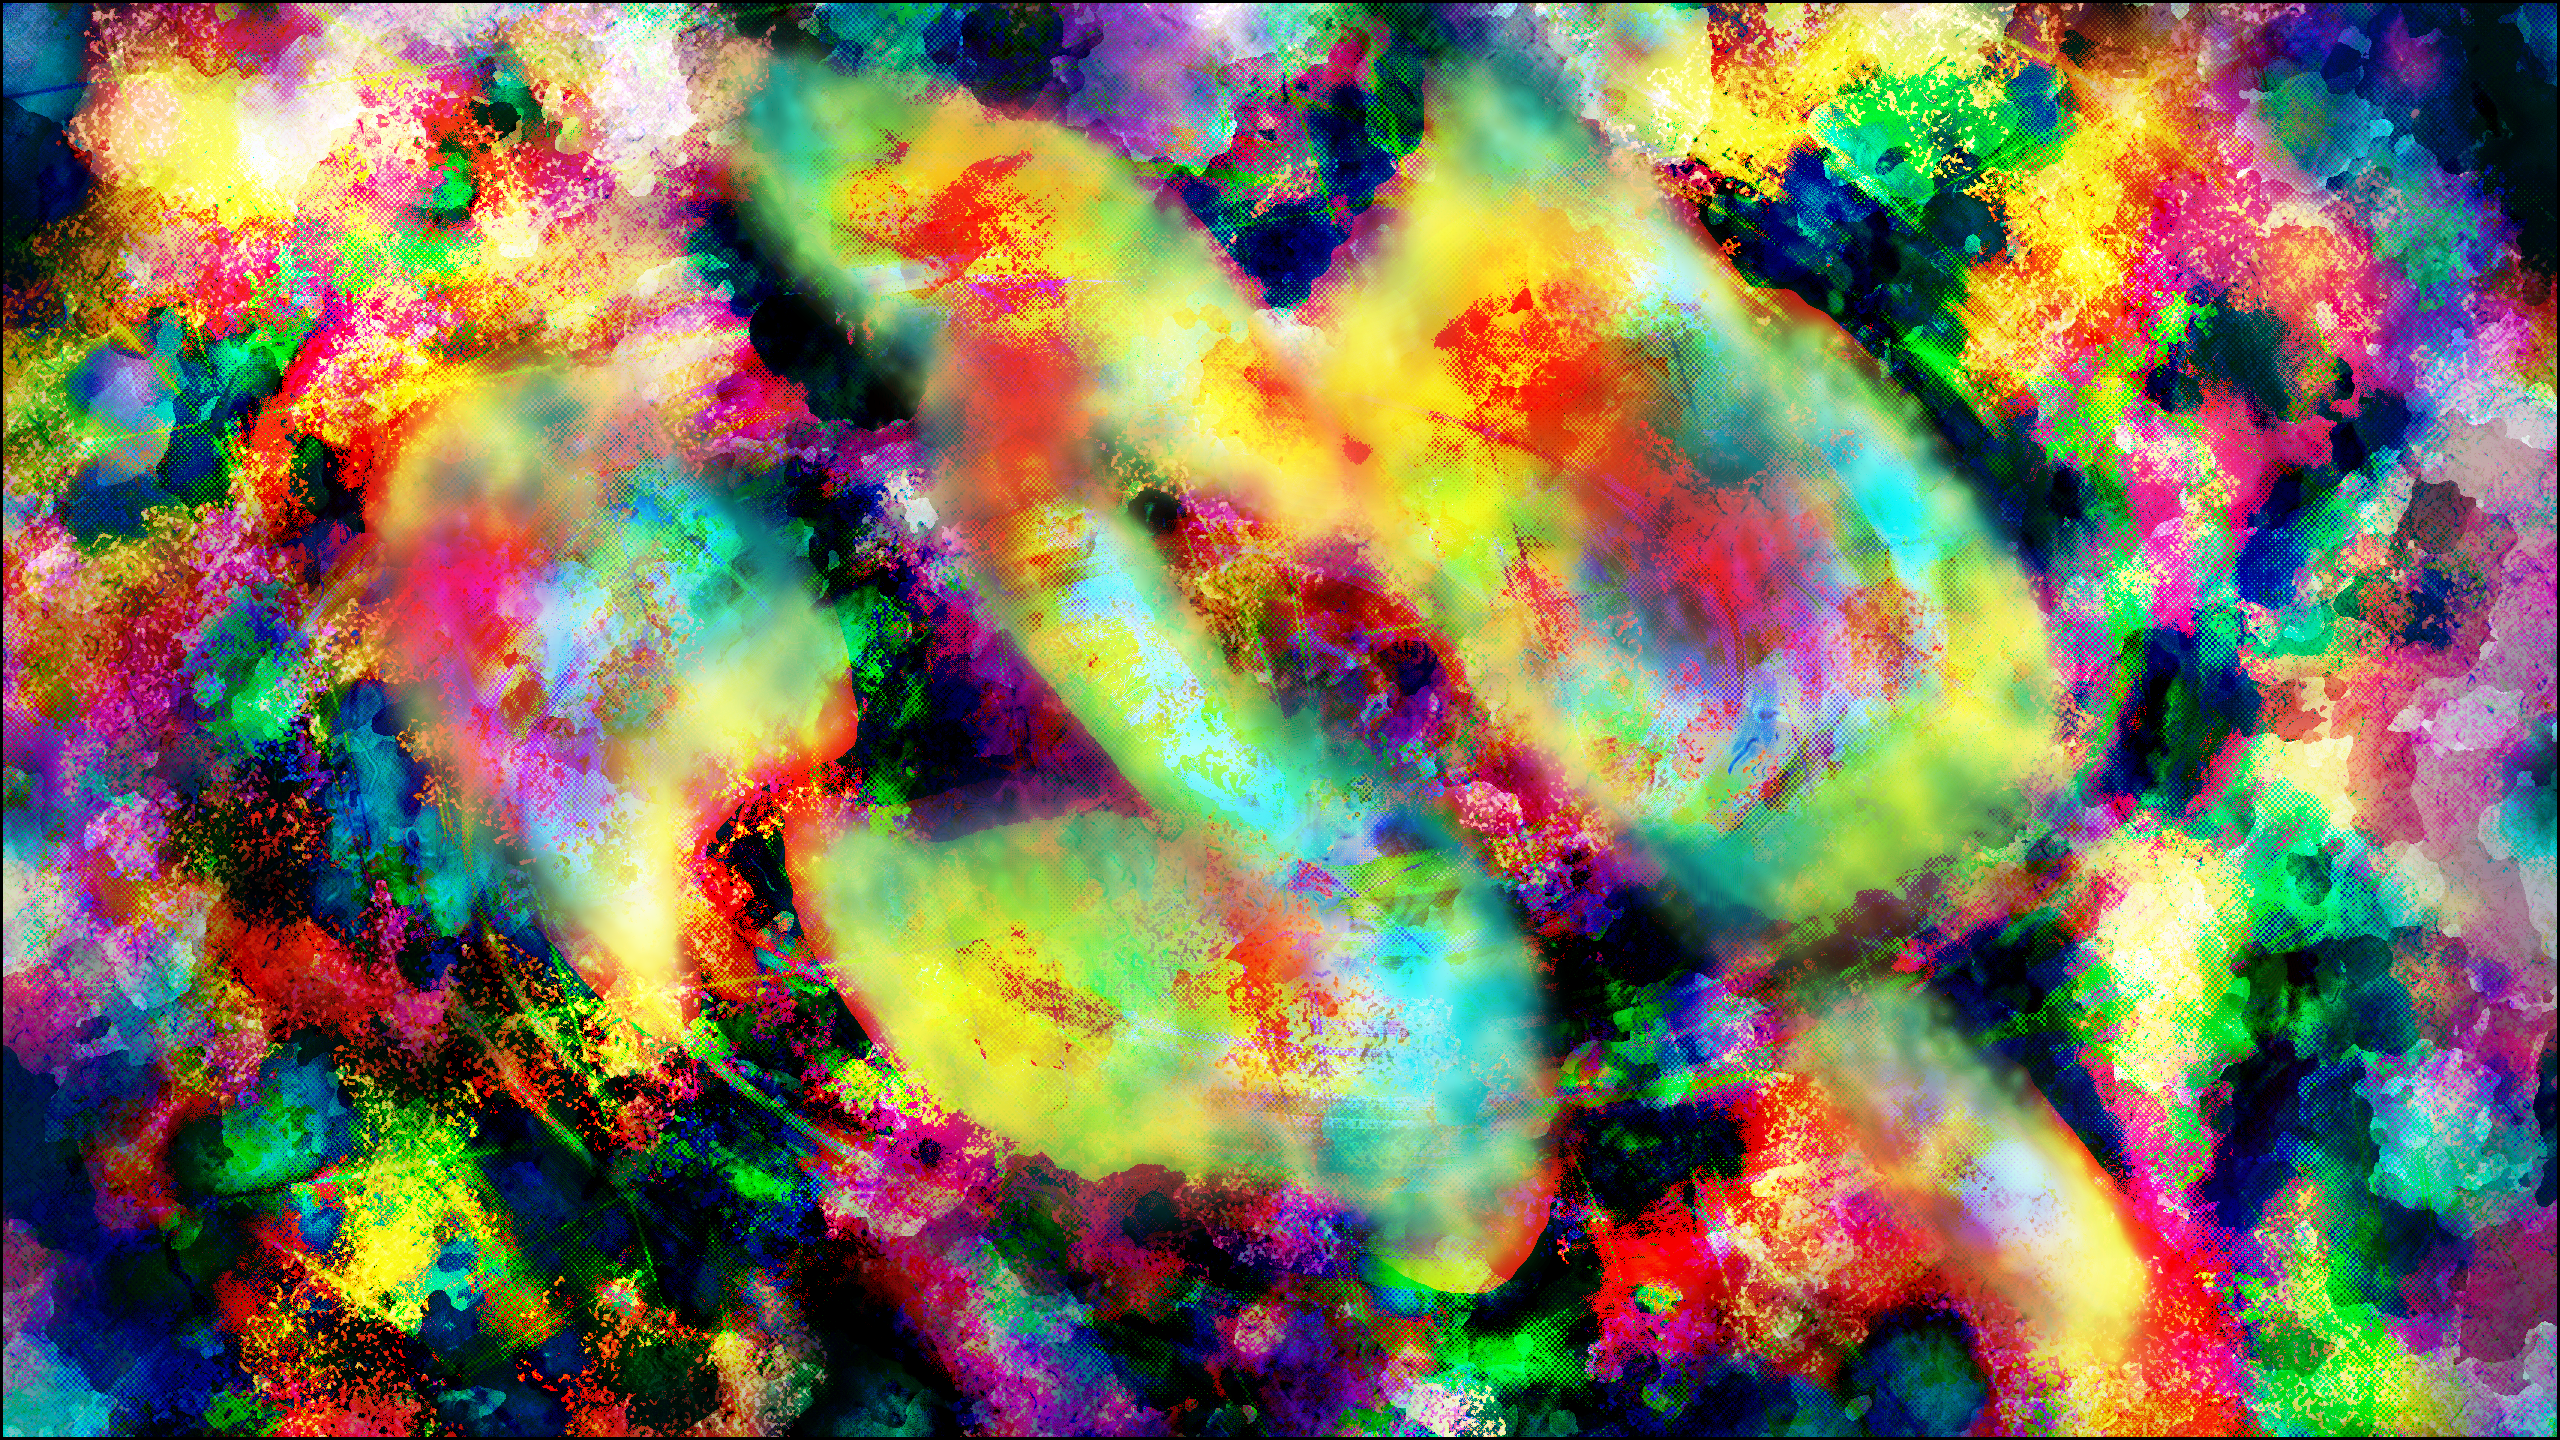 General 2560x1440 abstract LSD trippy psychedelic brightness digital art